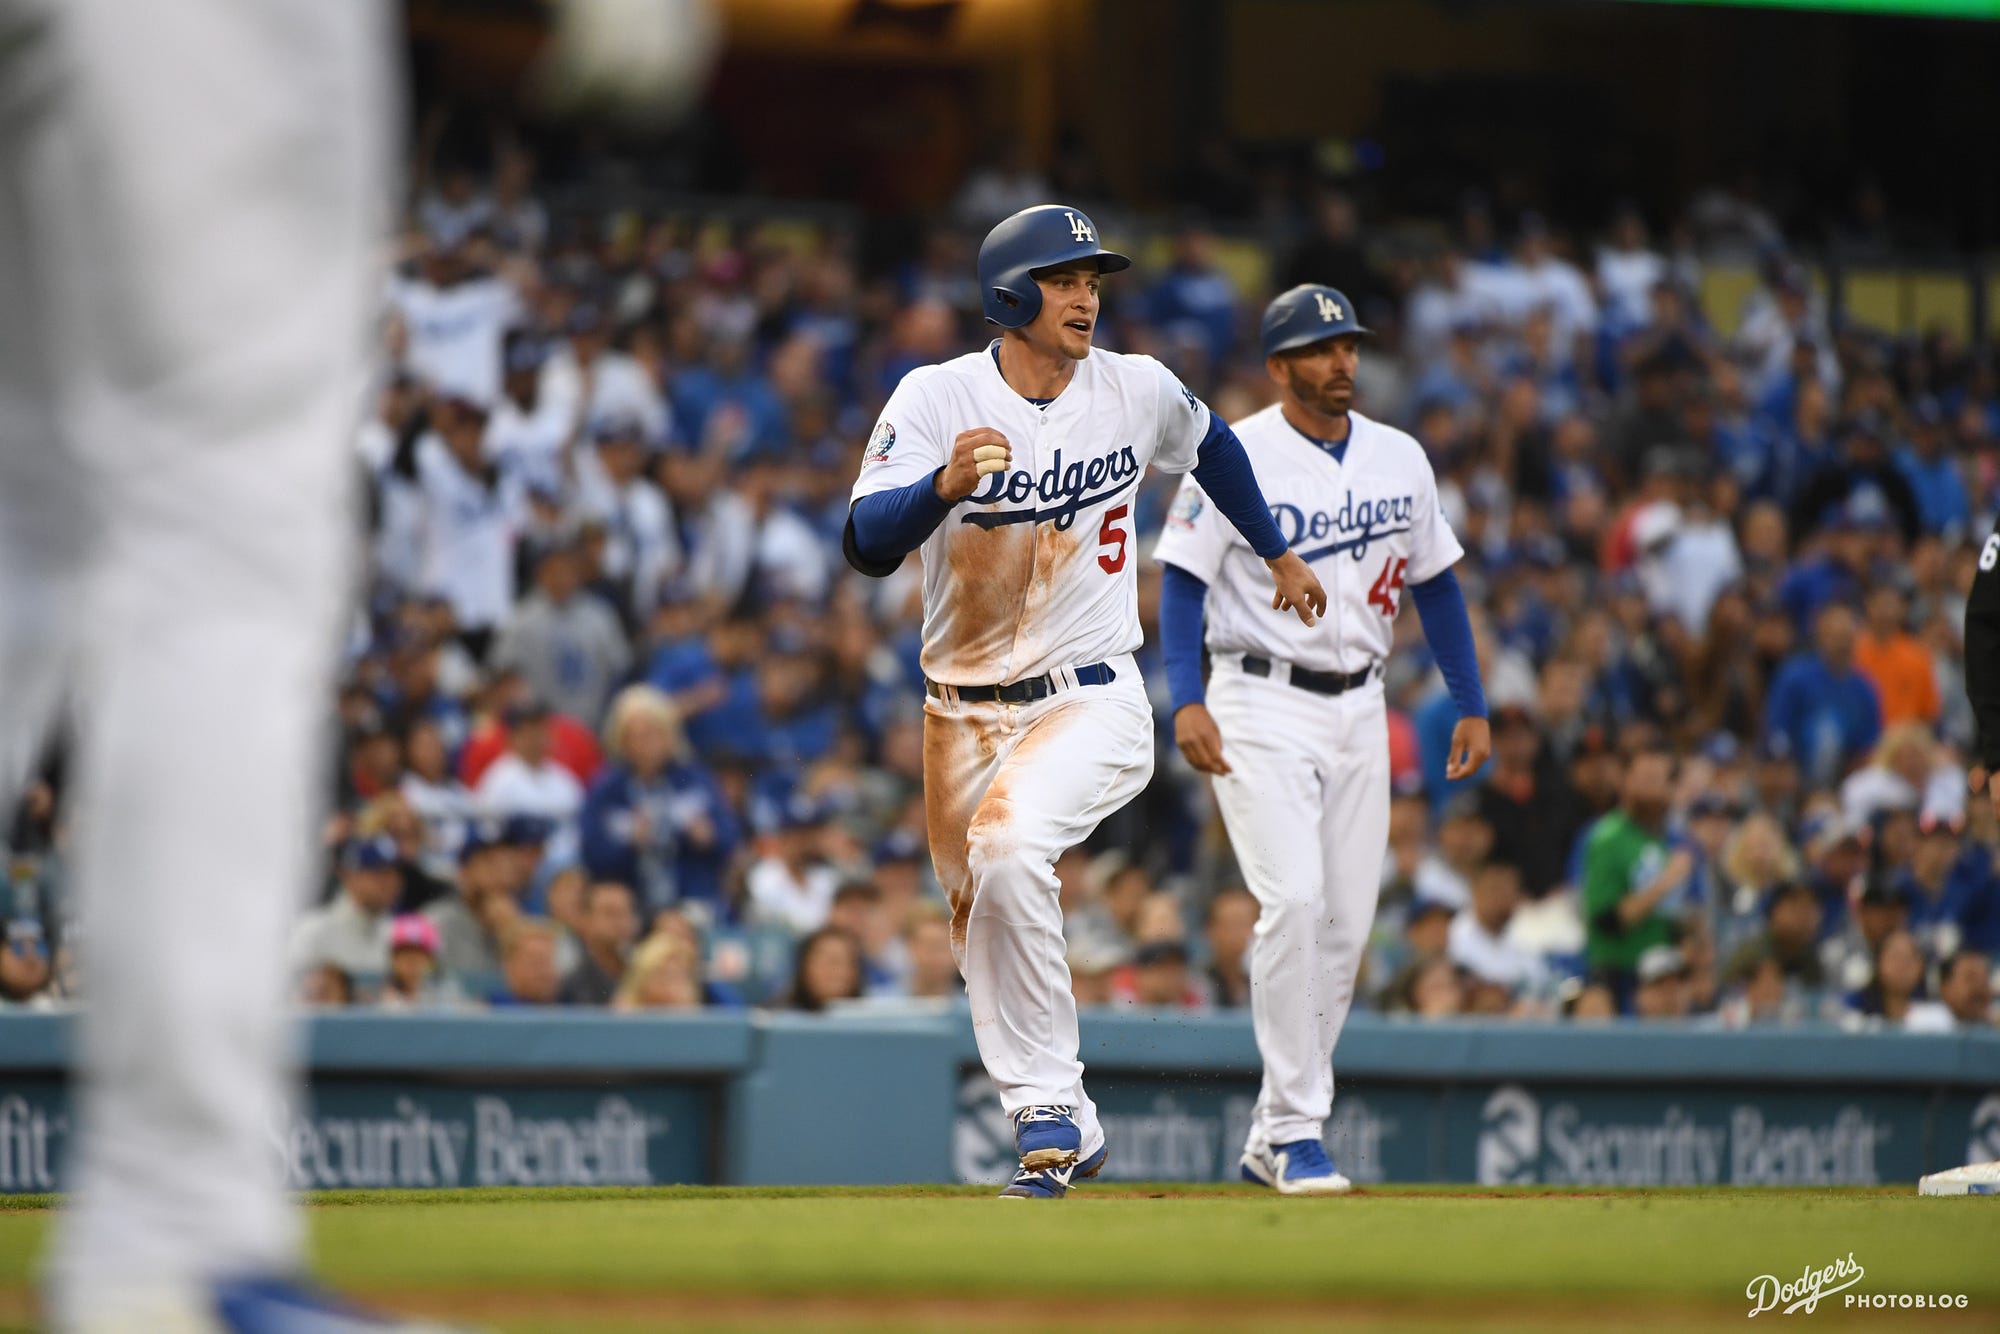 Photoblog: Dodgers convert the split, by Matthew Mesa